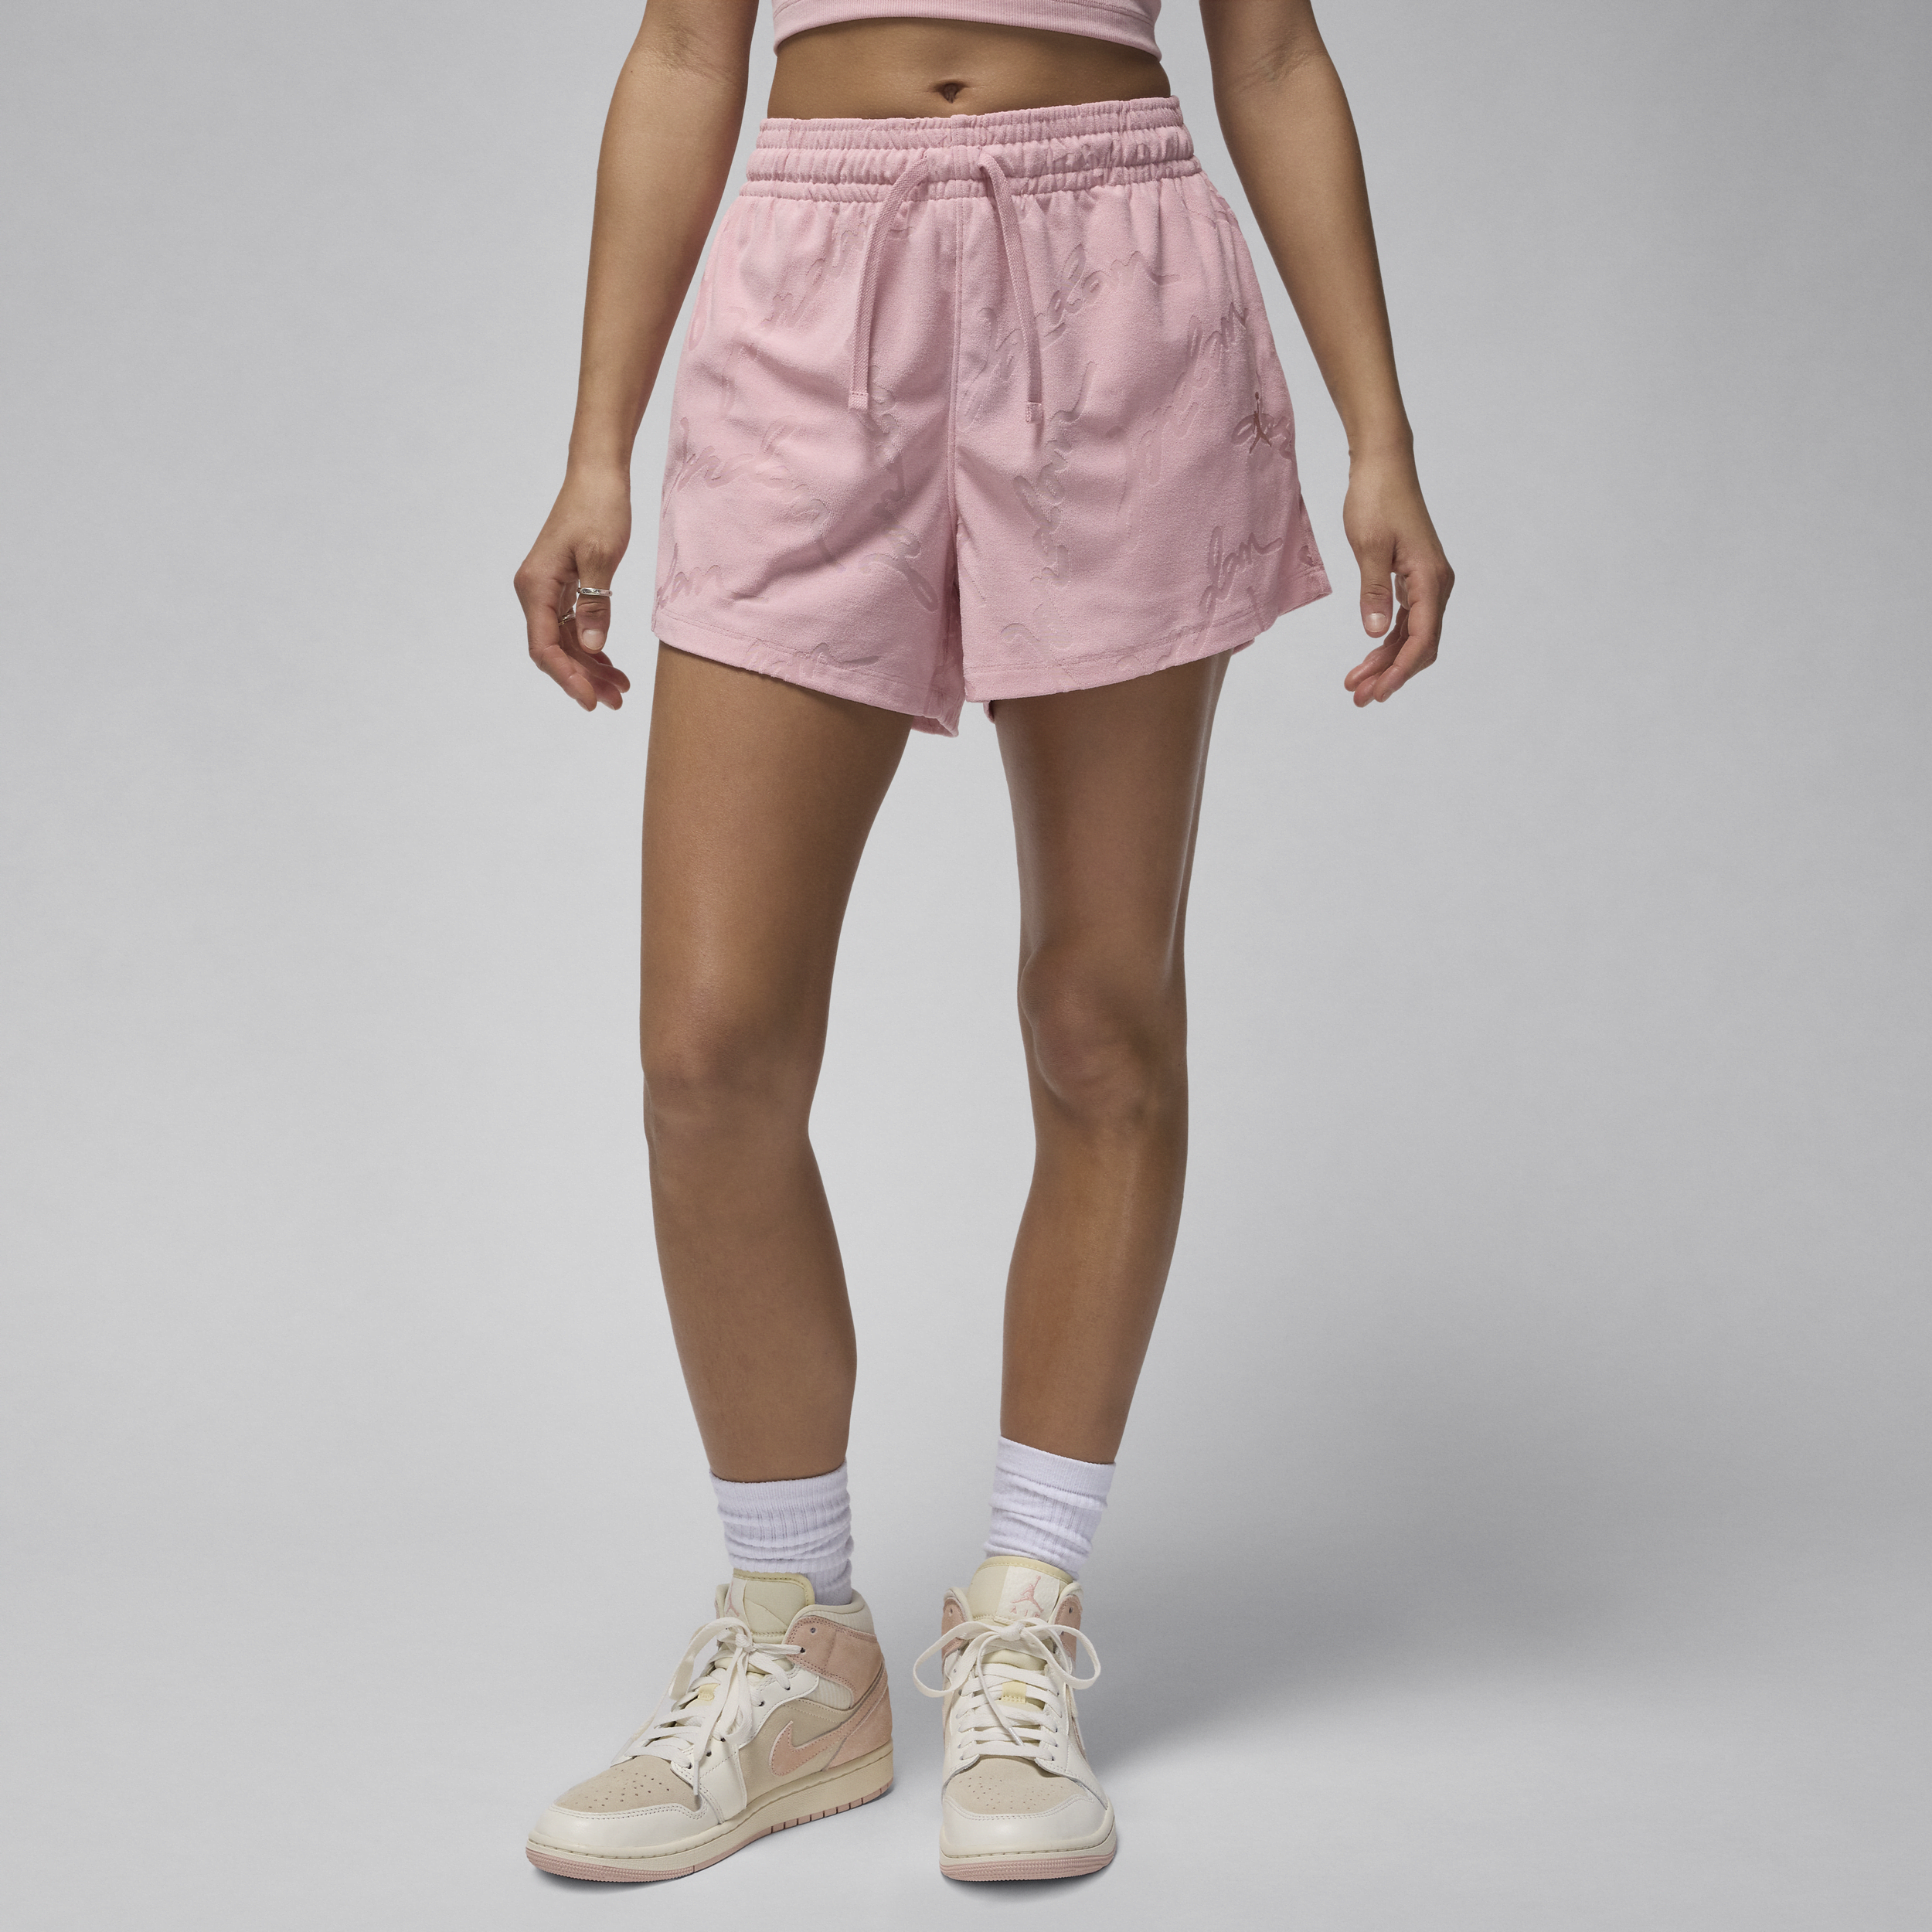 Nike Shorts in maglia Jordan – Donna - Rosa